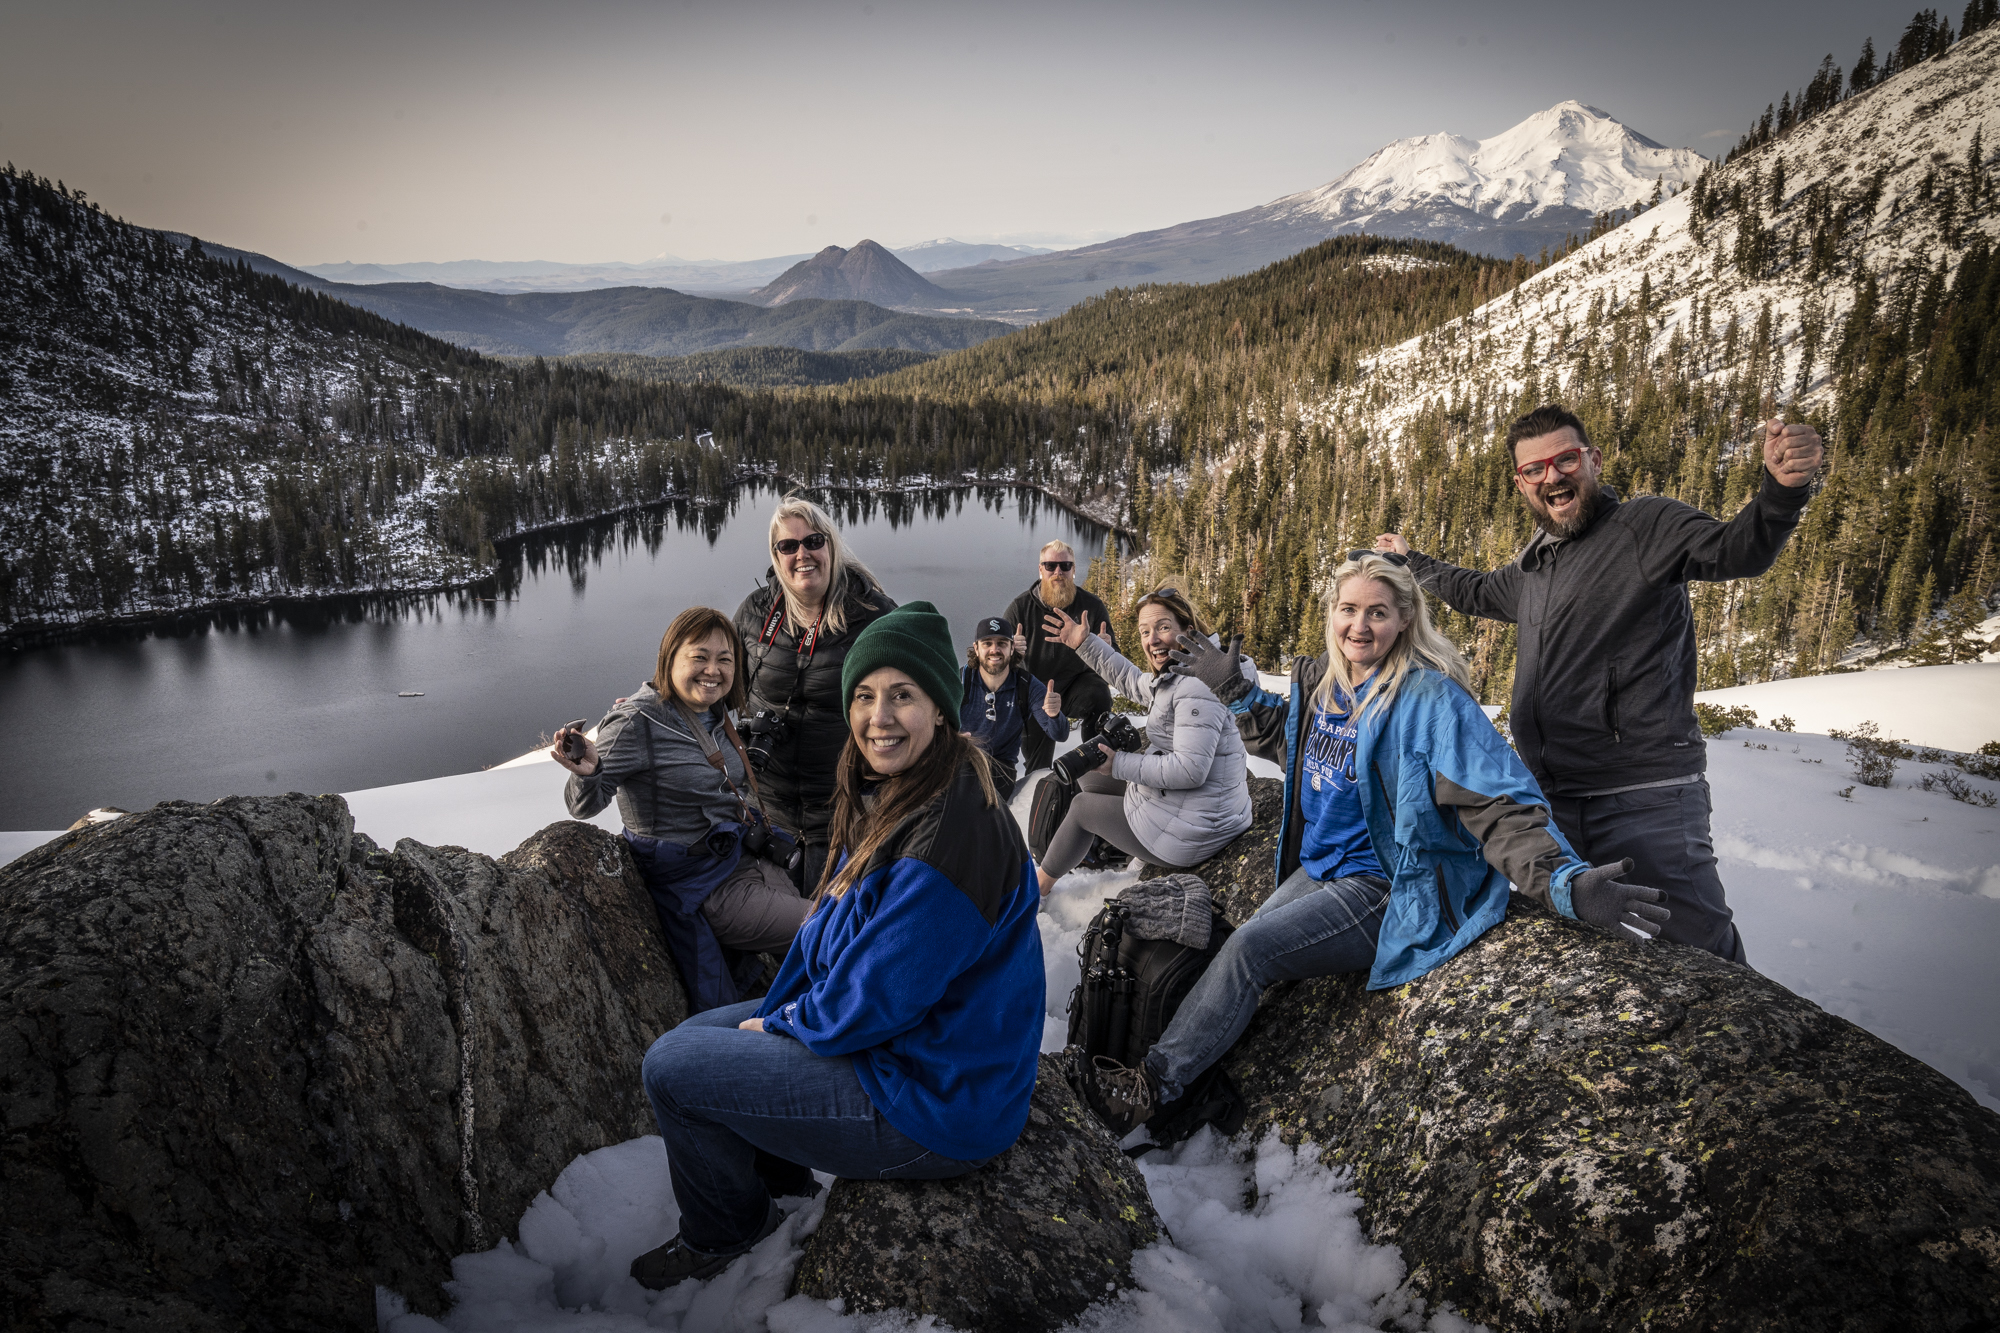 Mount Shasta Photography Workshop Students